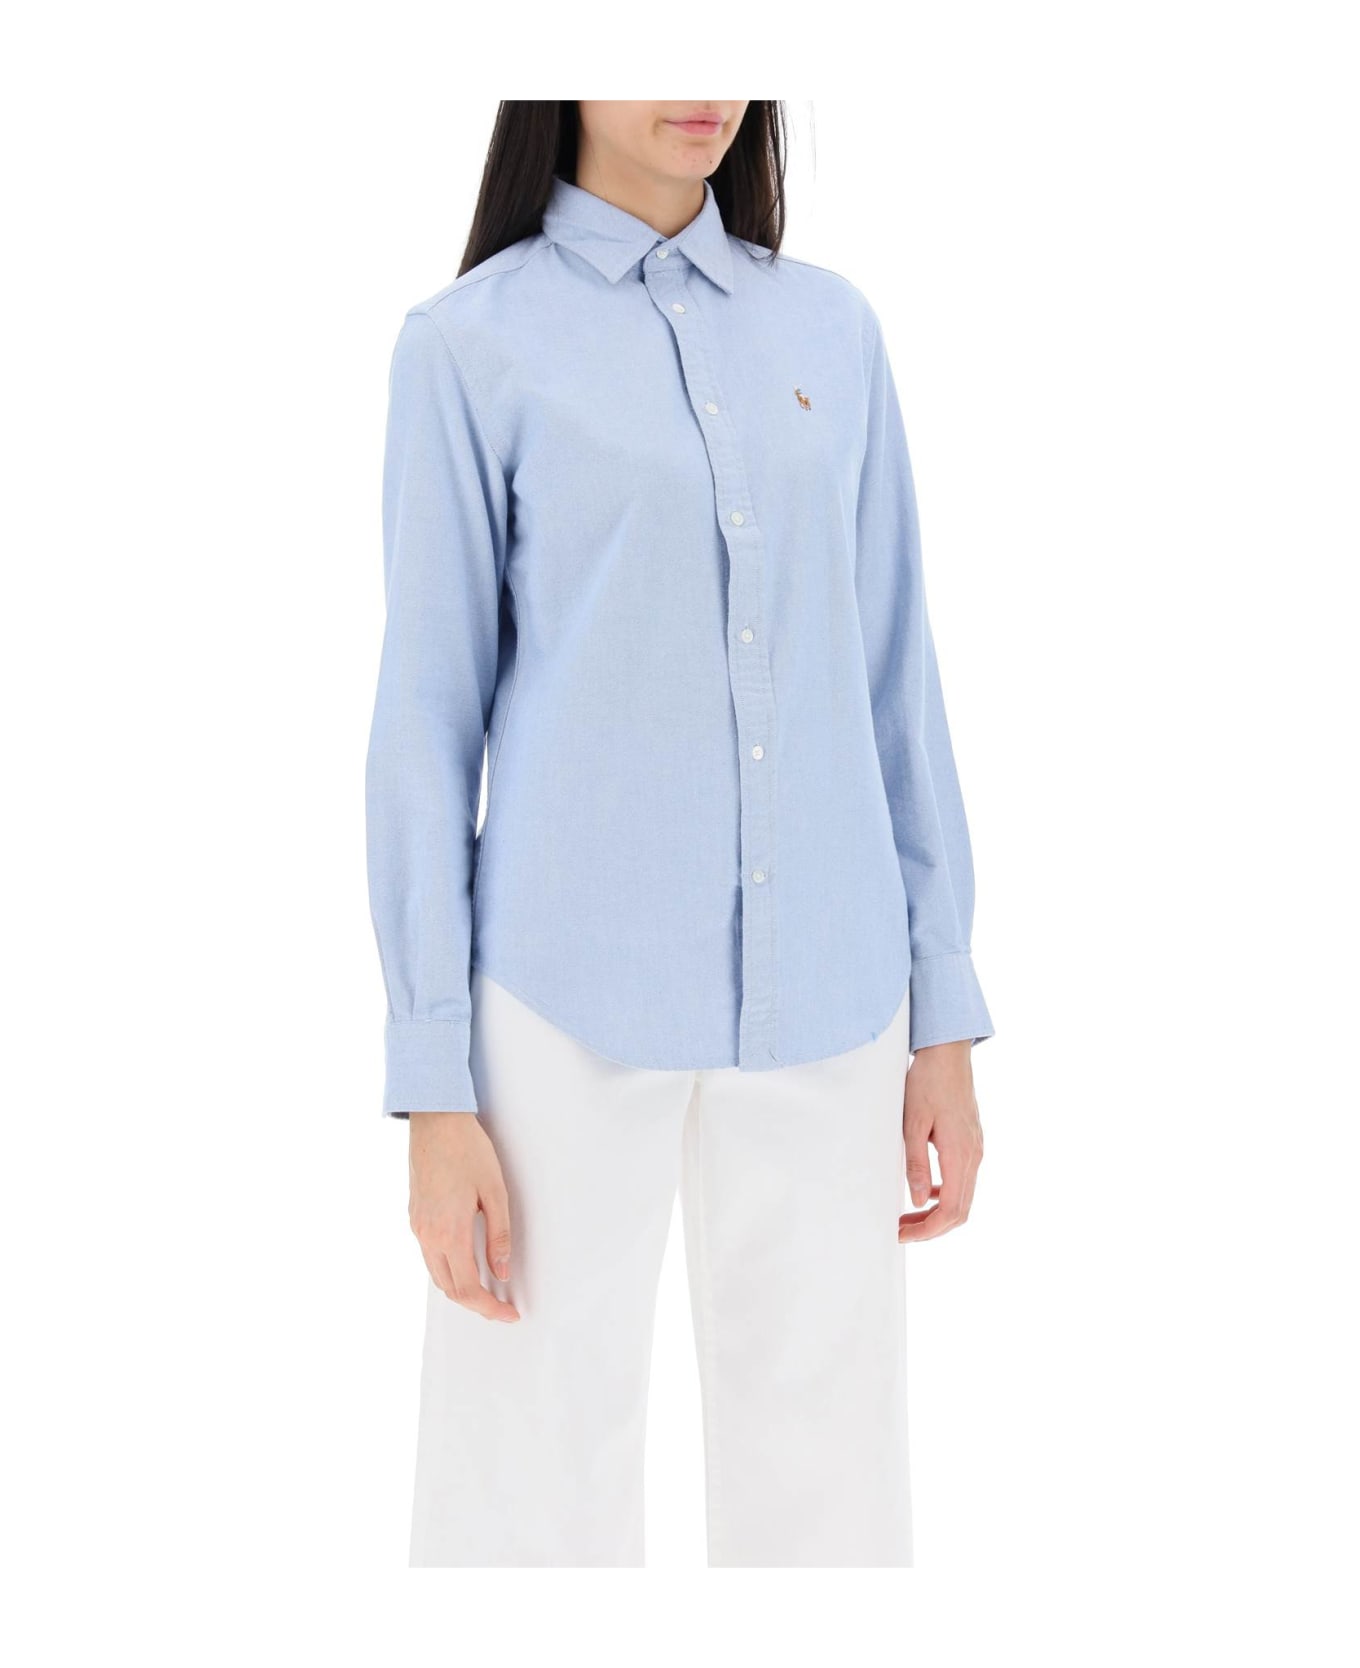 Polo Ralph Lauren Shirt With Pony - Light Blue